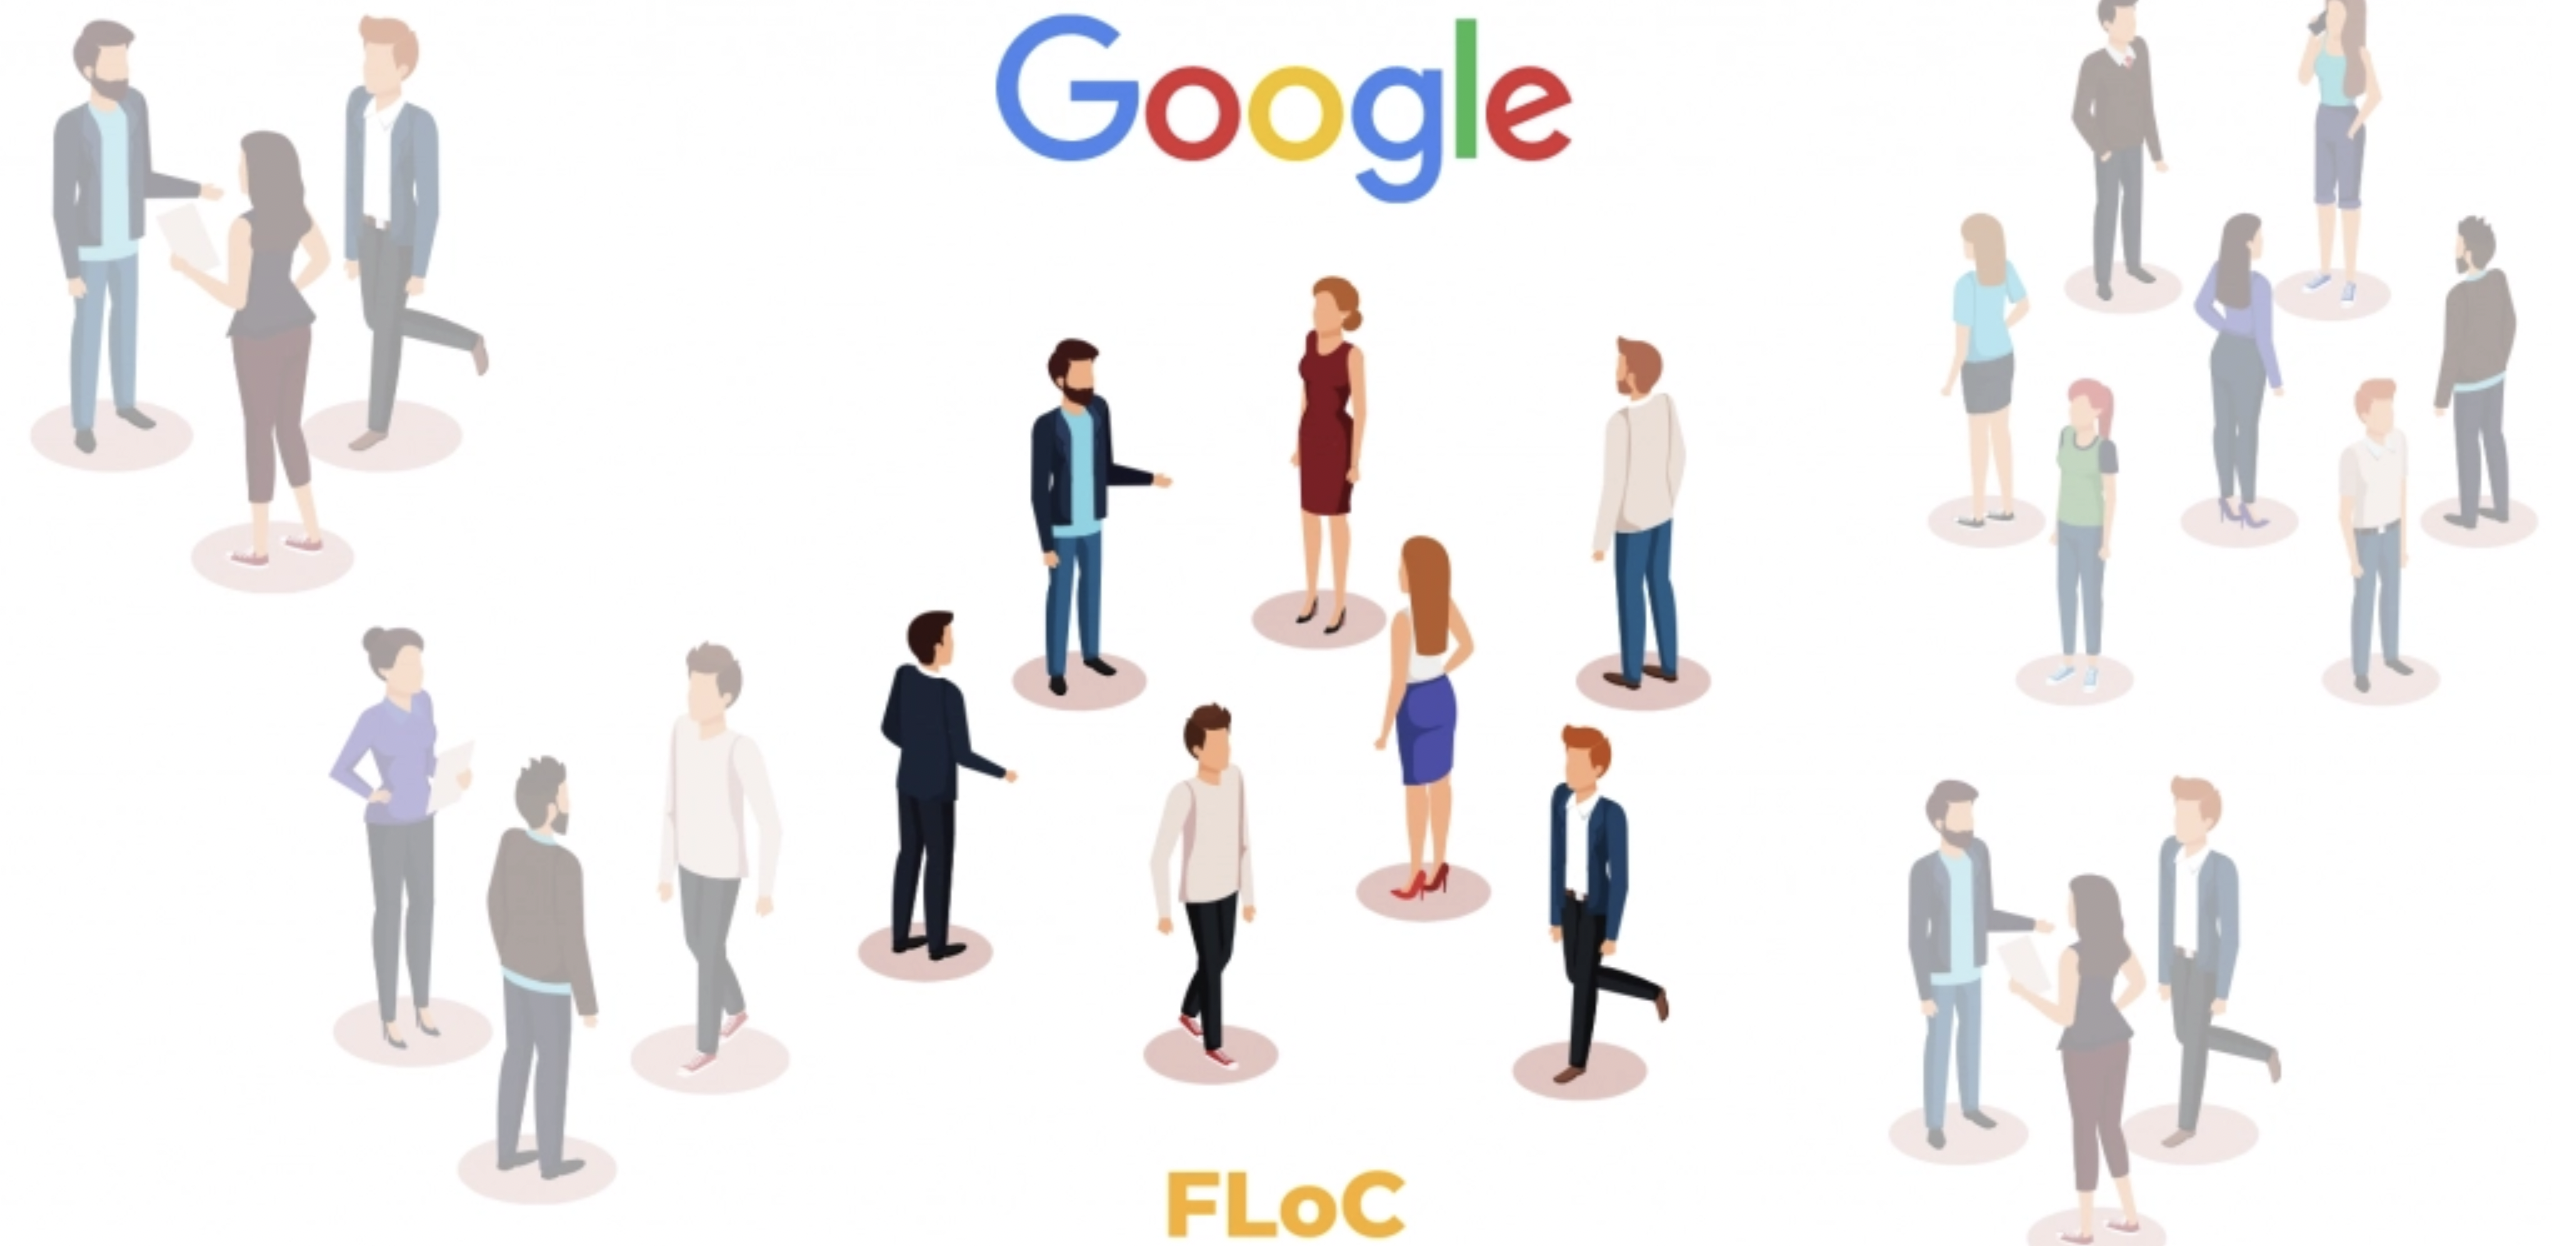 Google FLOC